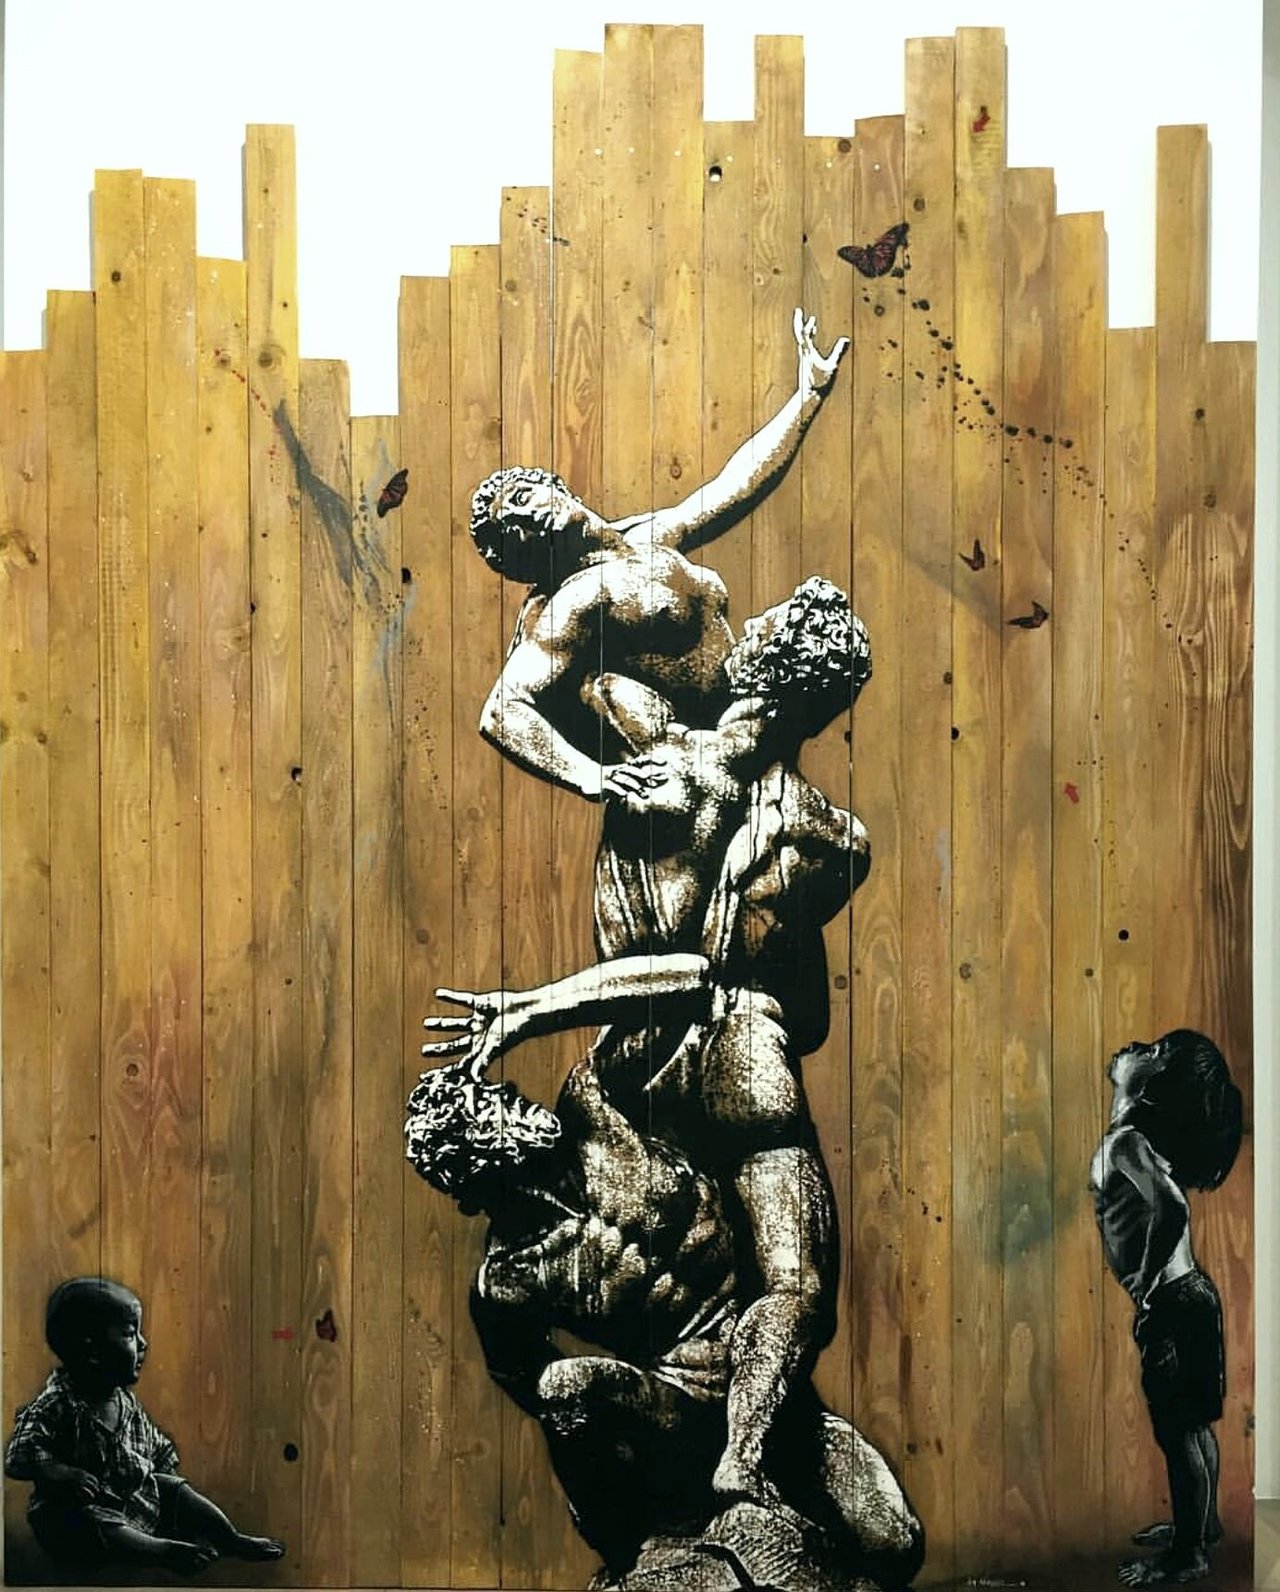 Breathtaking piece by #jefaerosol titled "out of reach" #streetart #art #contemporaryart #laurentstroukgalerie https://t.co/UeN21rj5Bt